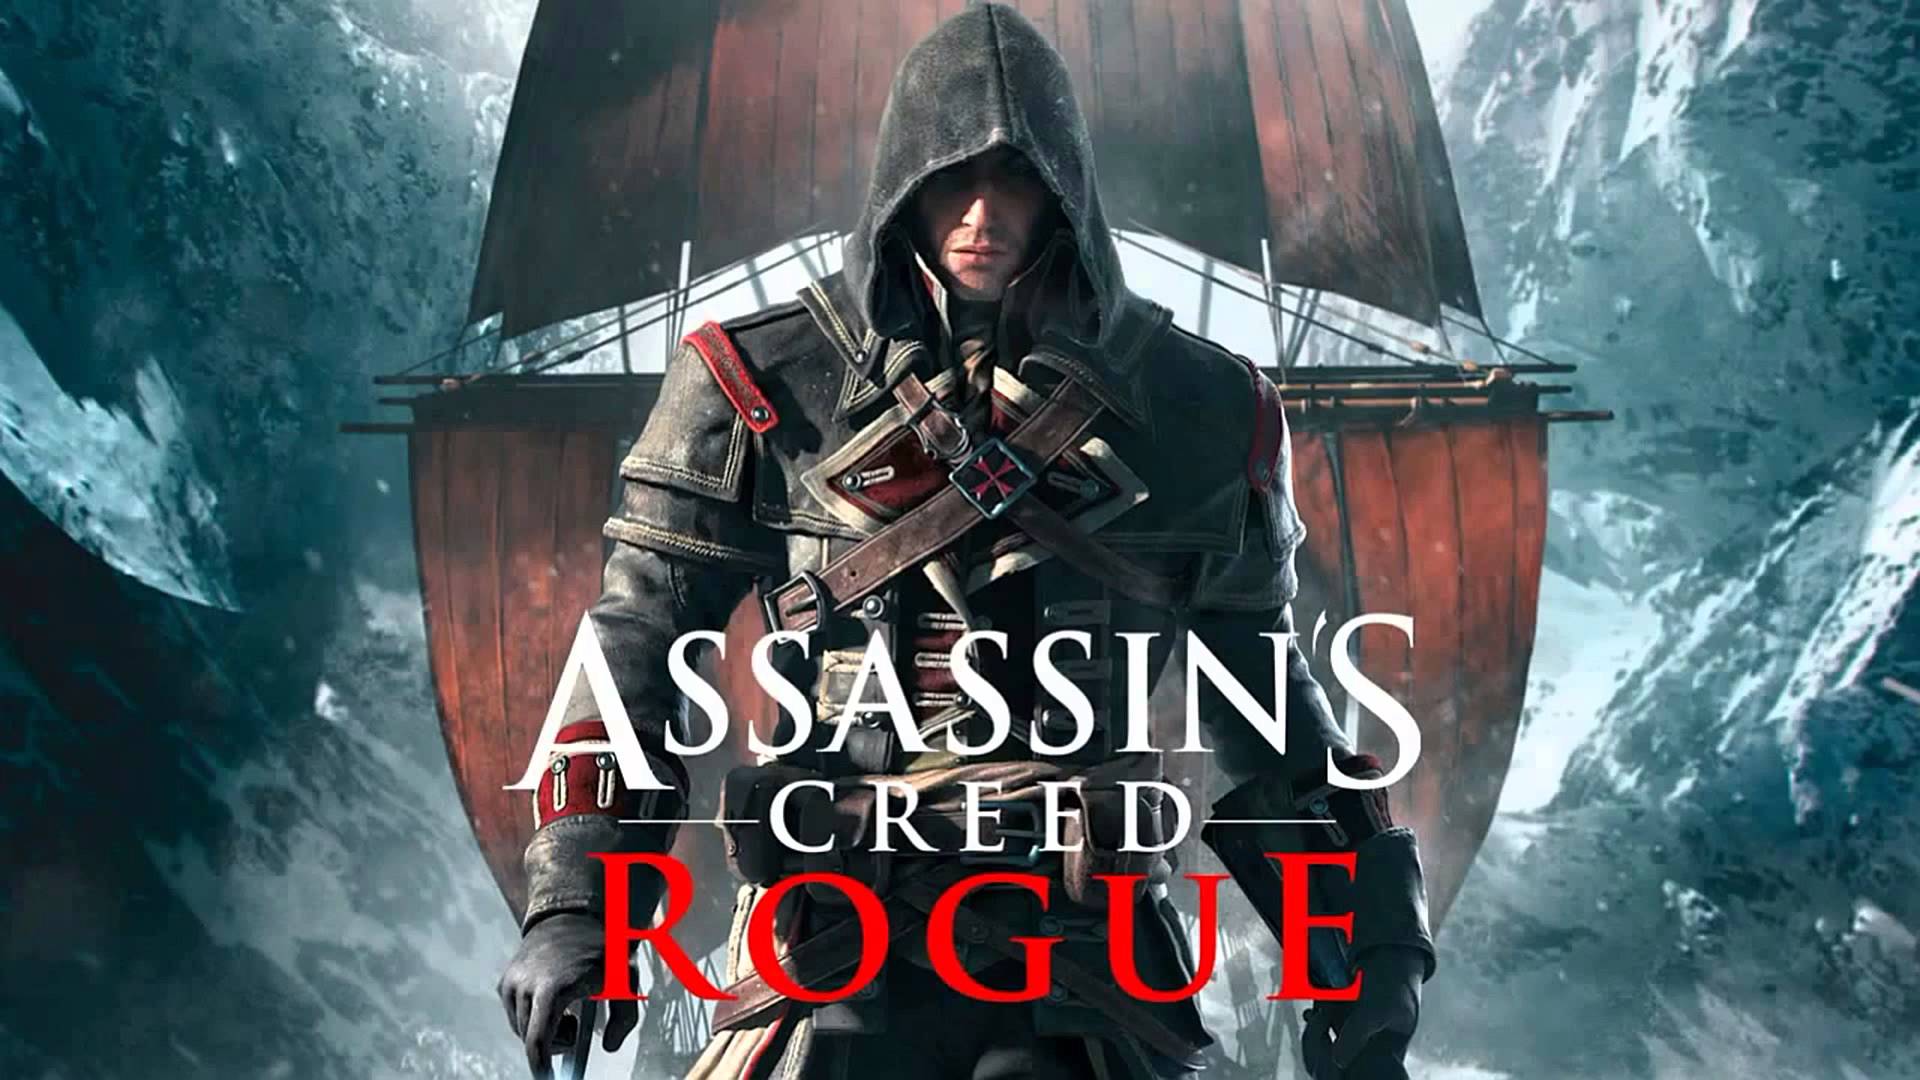 Assassin's Creed Rogue Wallpaper HD. Assassins creed